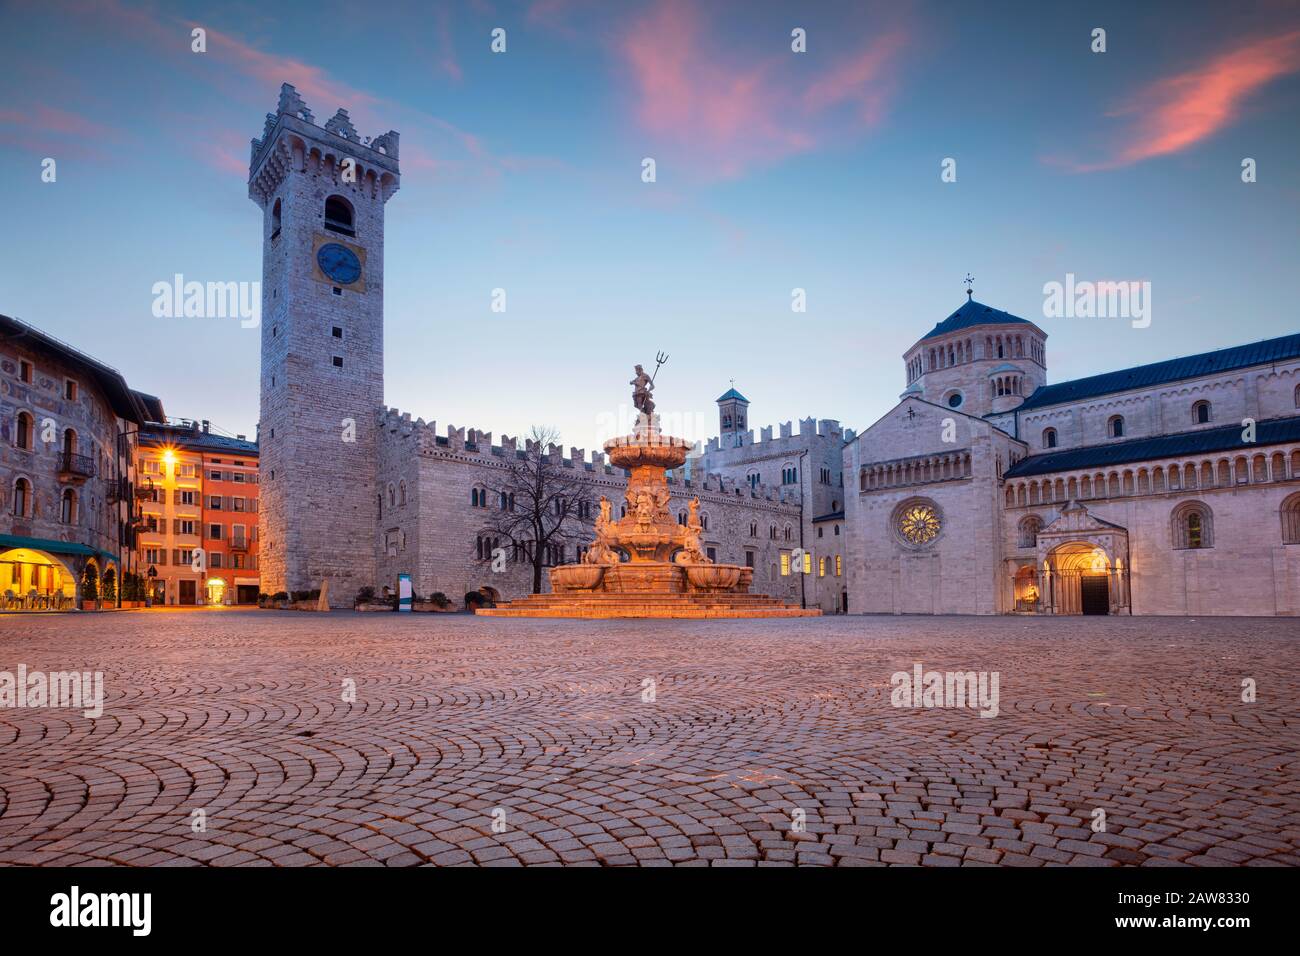 Trento, Italy. Cityscape image of historical city of Trento, Trentino, Italy during twilight blue hour. Stock Photo